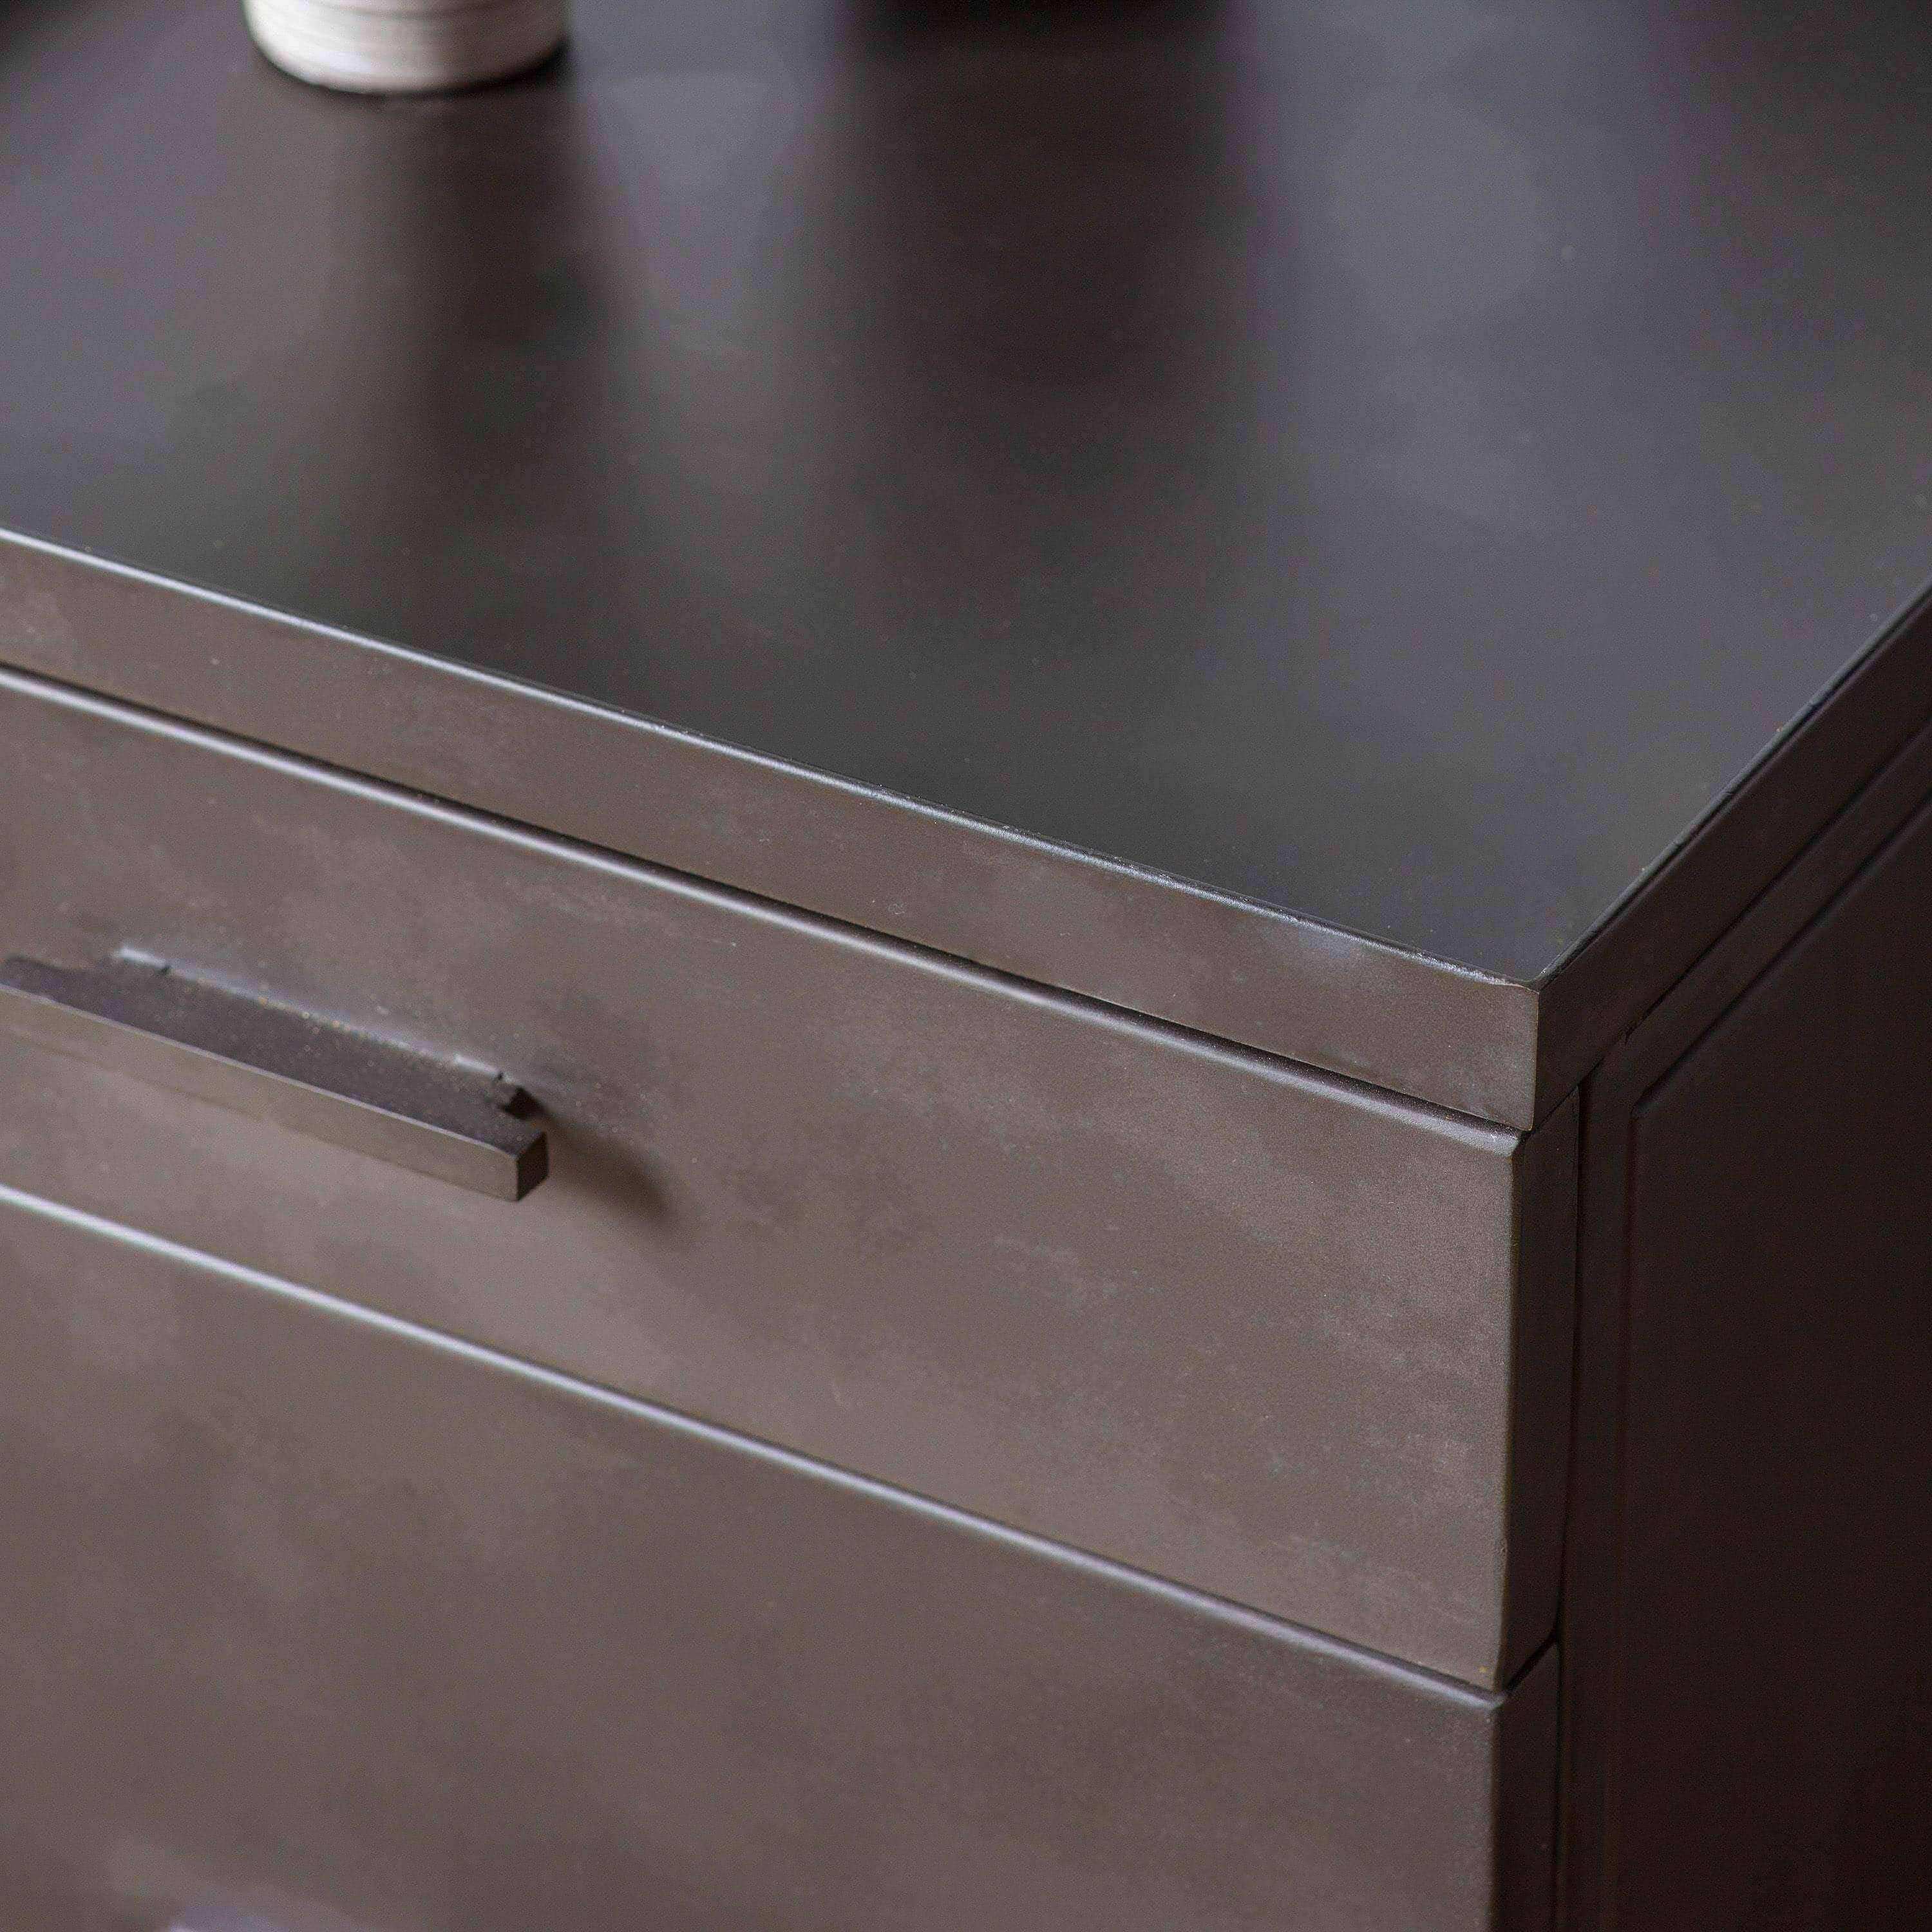 Industrial Metal Pilsdon 2 Drawer Side Cabinet - The Farthing